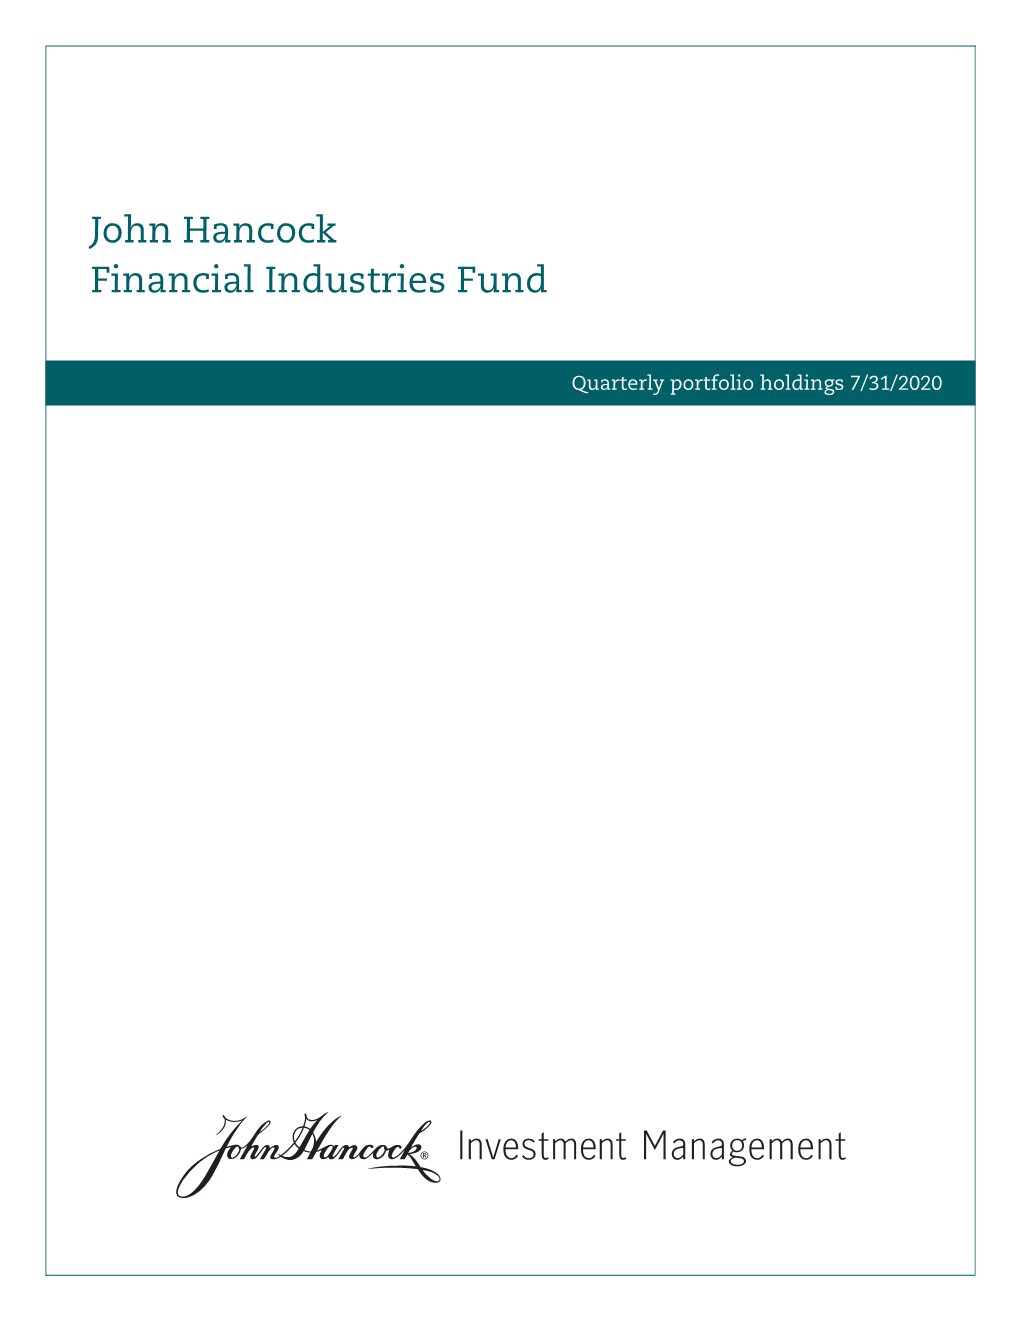 John Hancock Financial Industries Fund